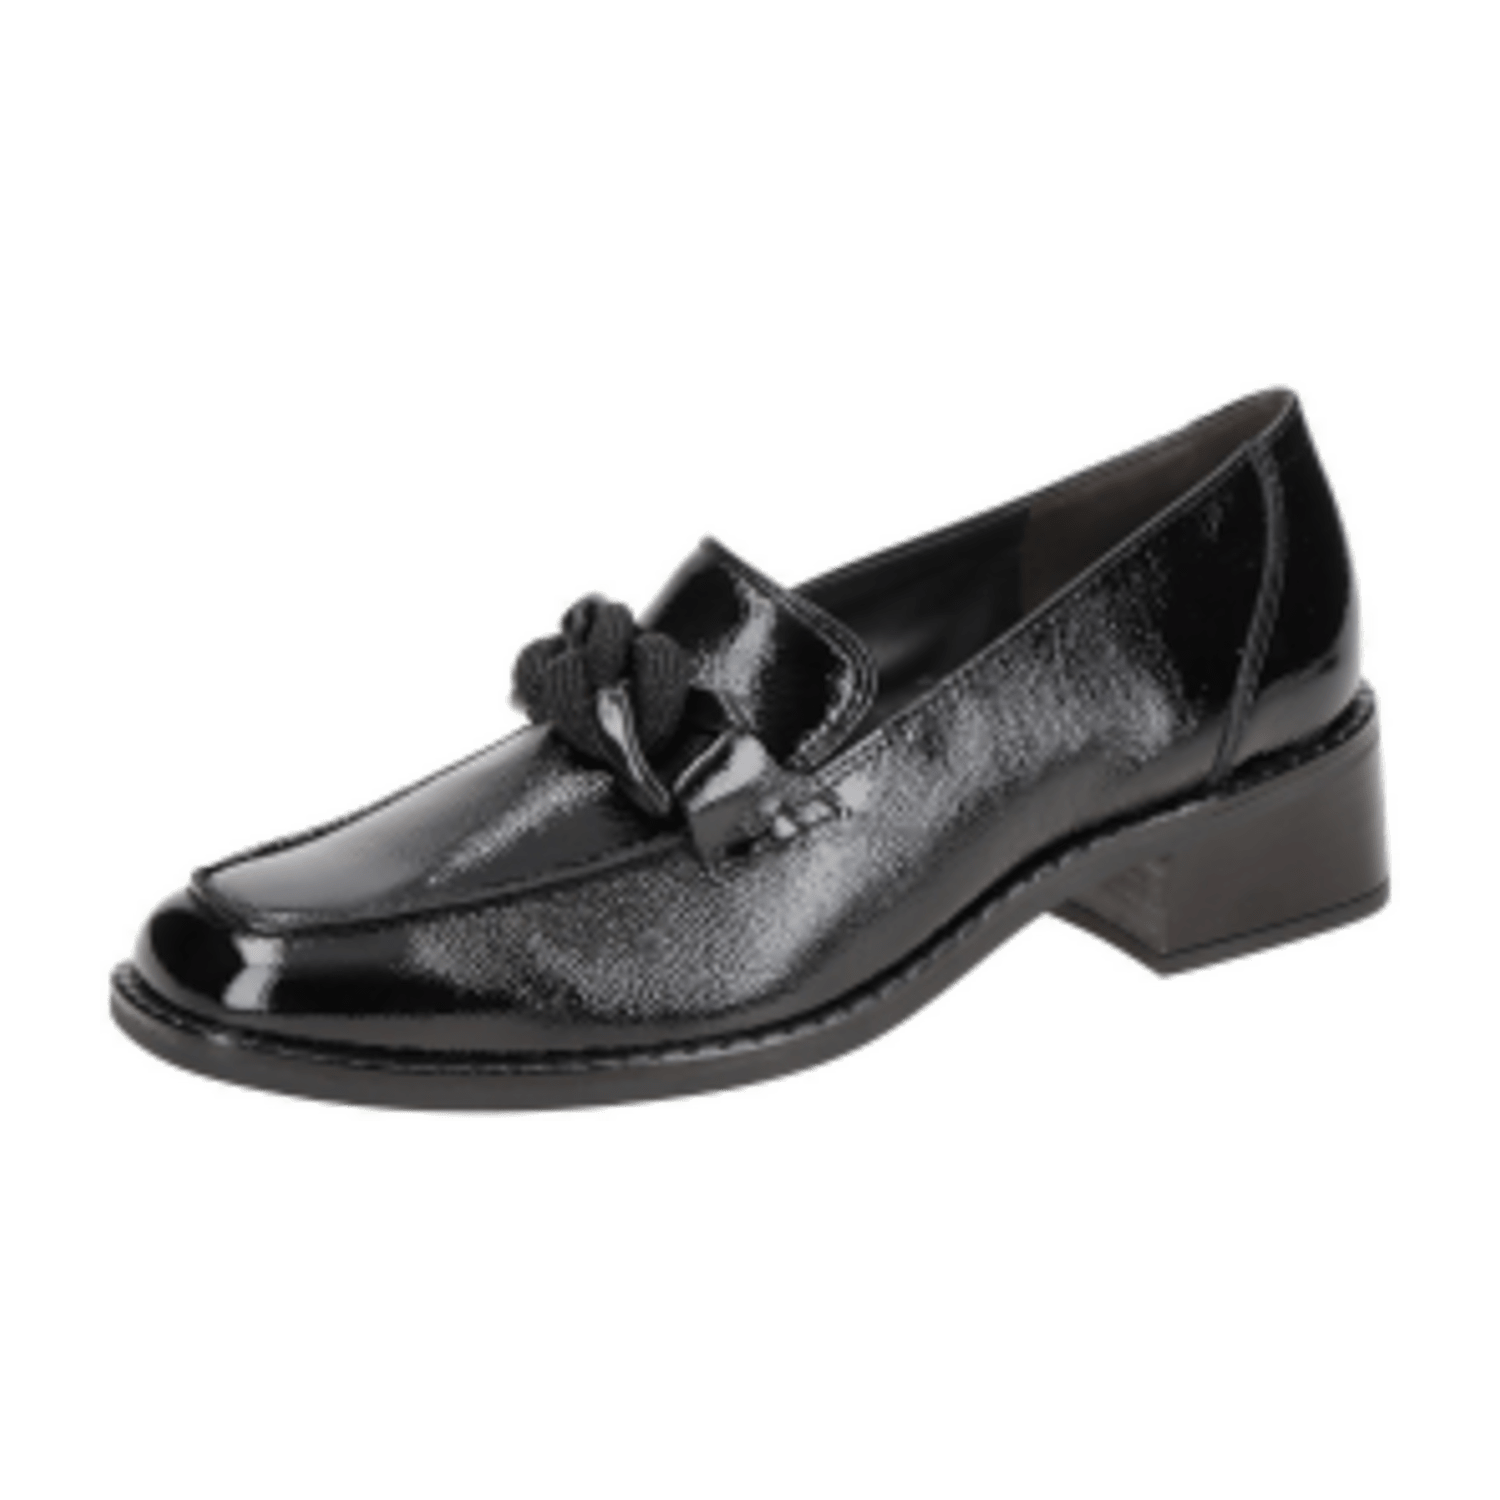 Paul Green Schuhe Slipper schwarz Lack 1048